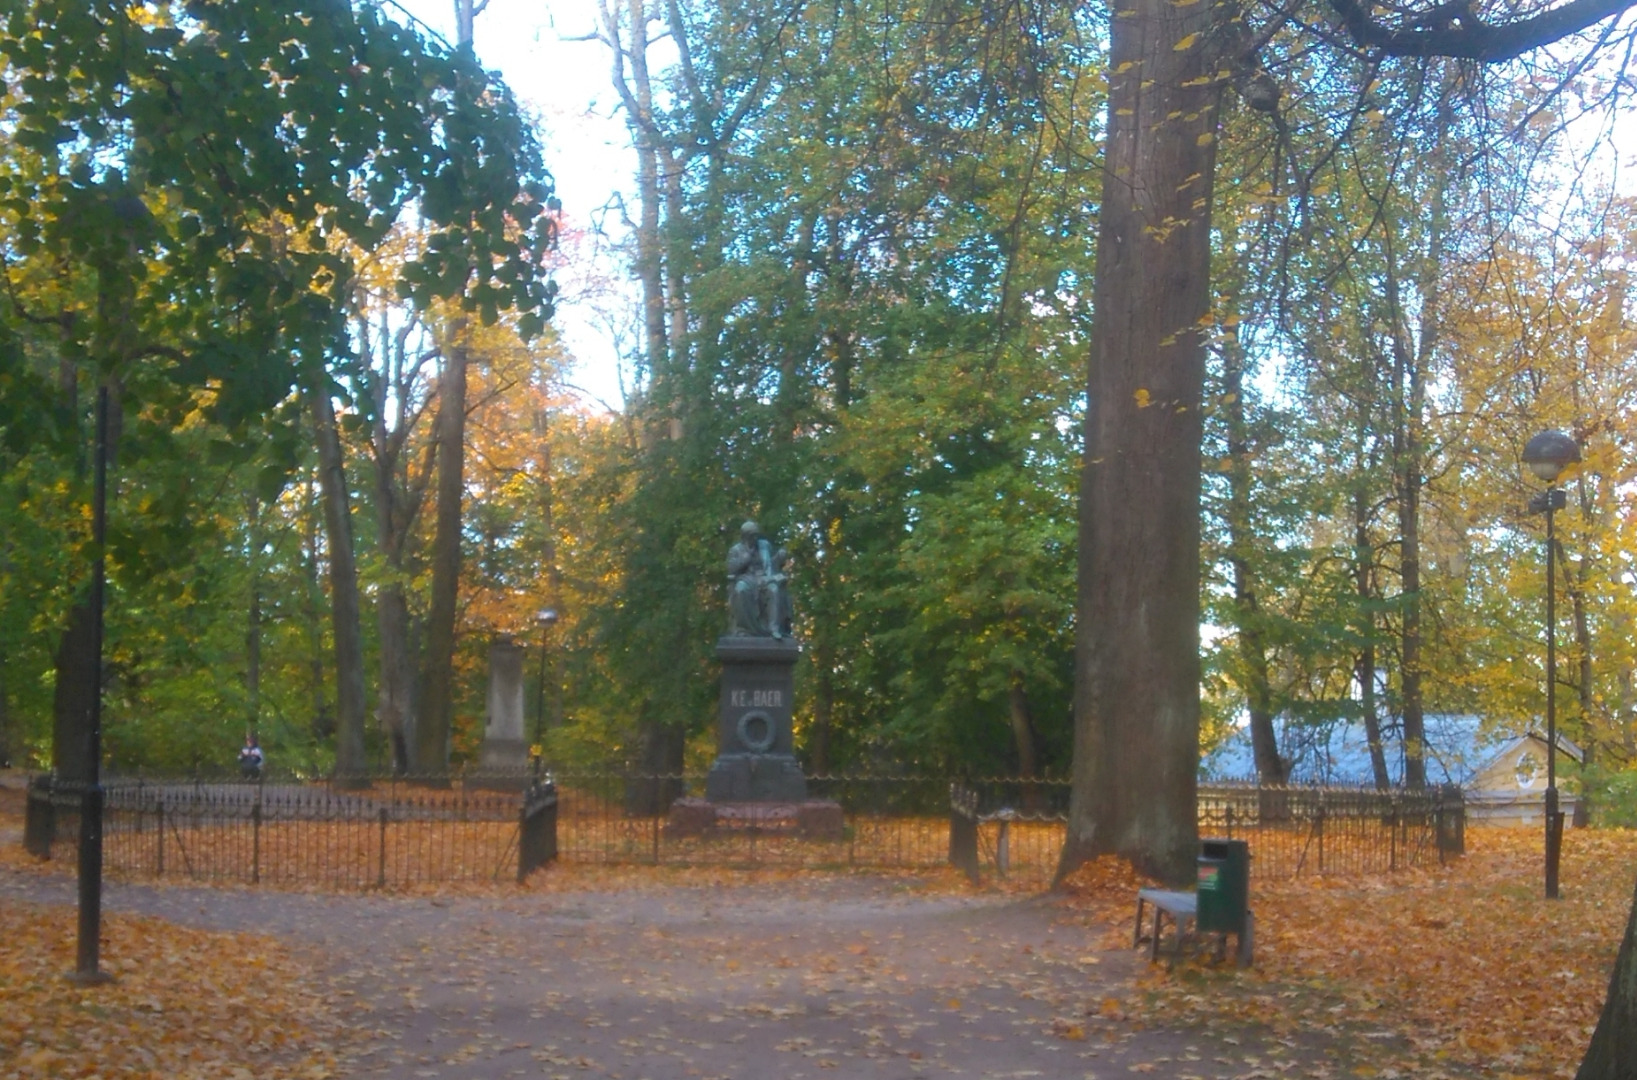 Tartu, E. K. Baer´i mälestussammas Toomemäel rephoto